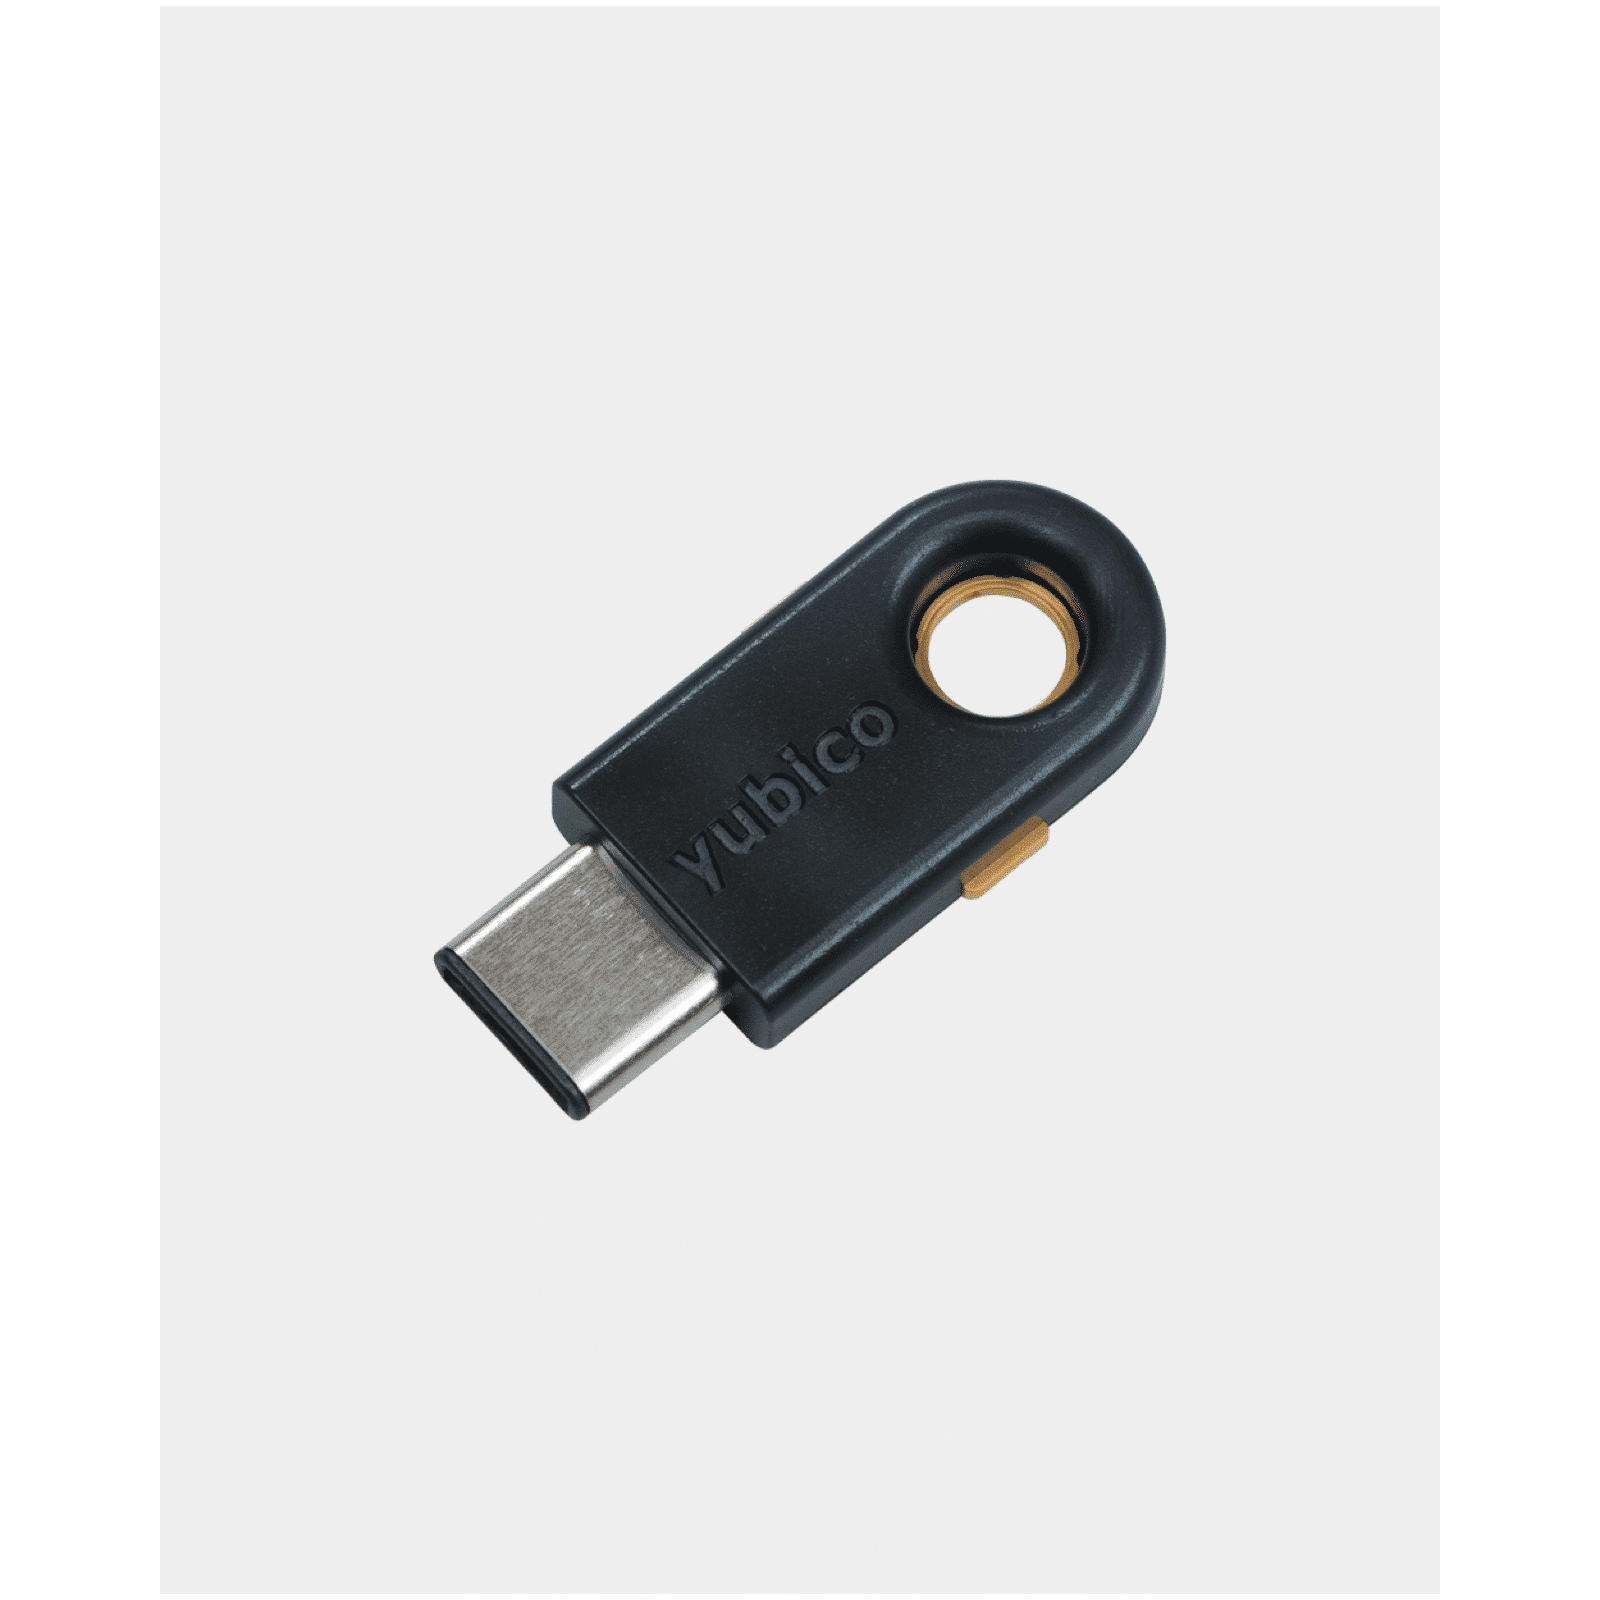 Аппаратный ключ безопасности Yubico YubiKey 5C (YubiKey_5C)